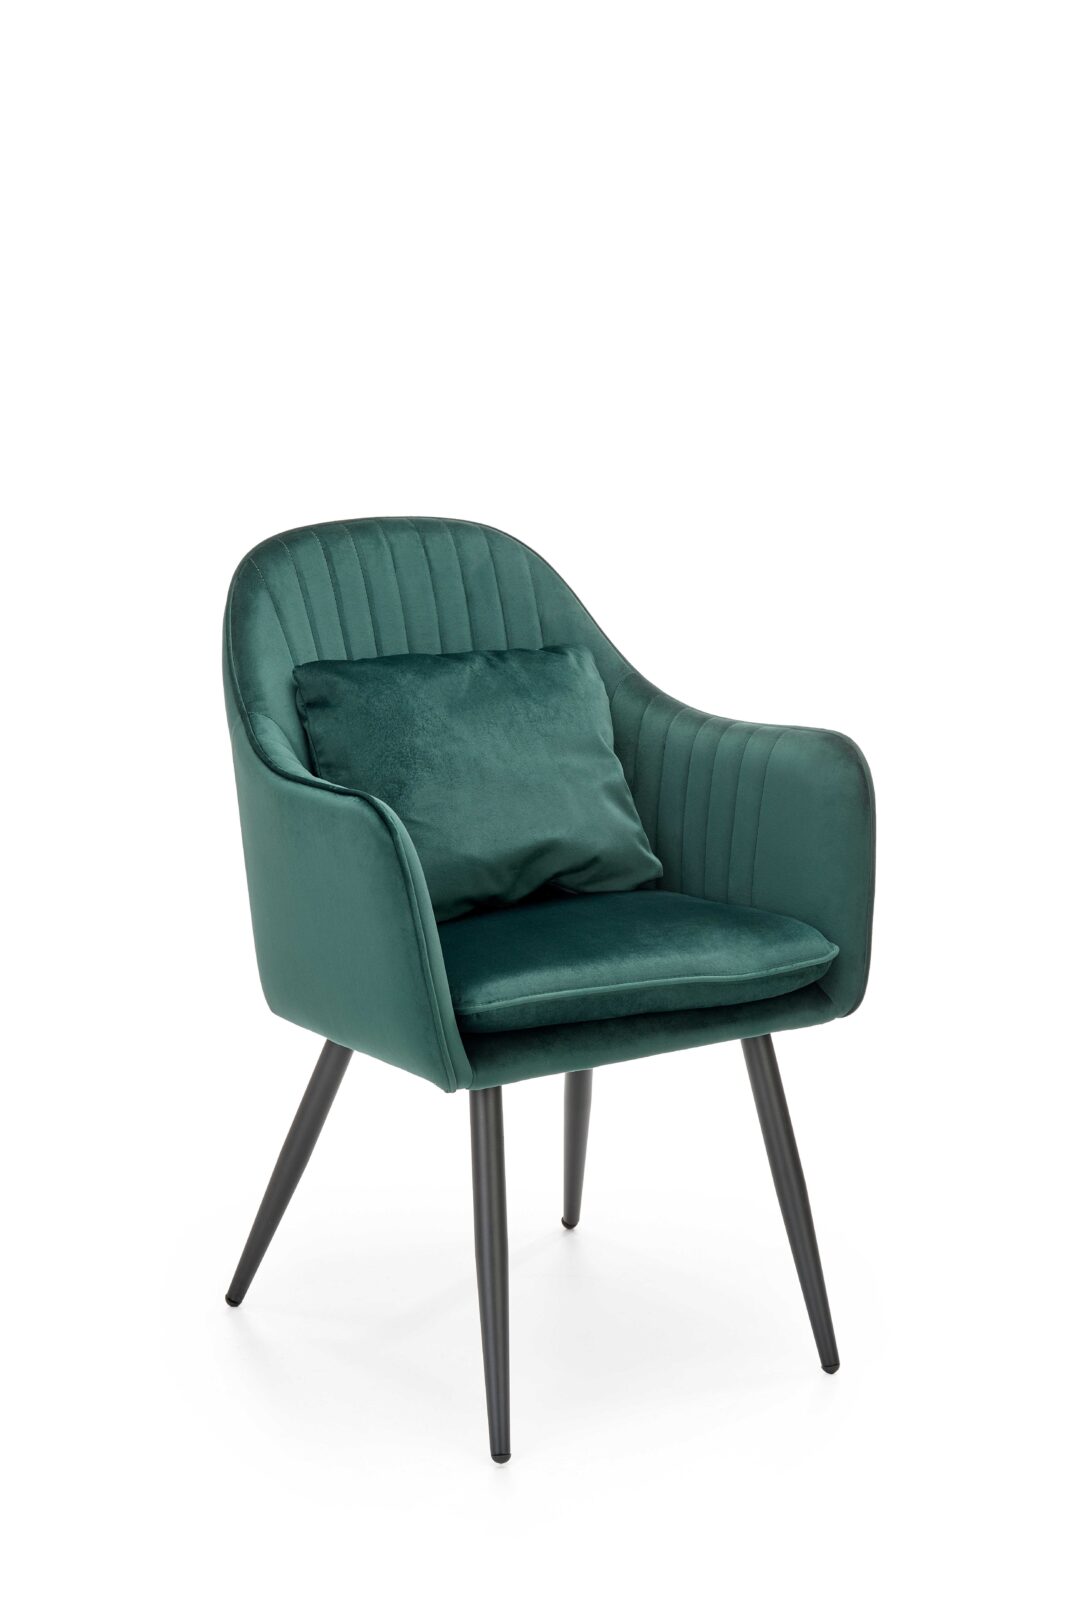 K464 chair dark green DIOMMI V-CH-K/464-KR-C.ZIELONY